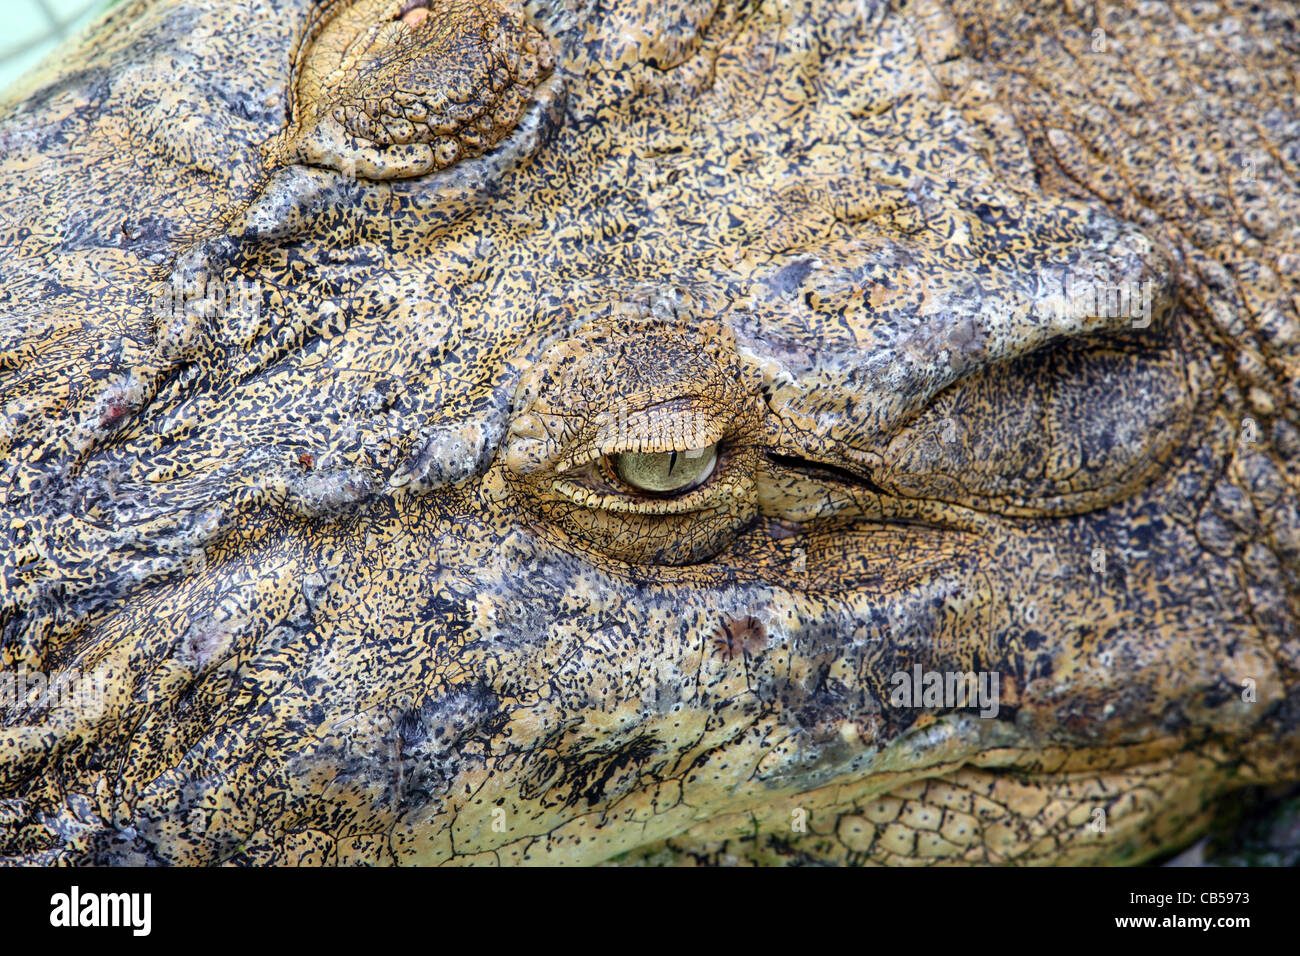 Closeup of crocodile eye and face. Stock Photo